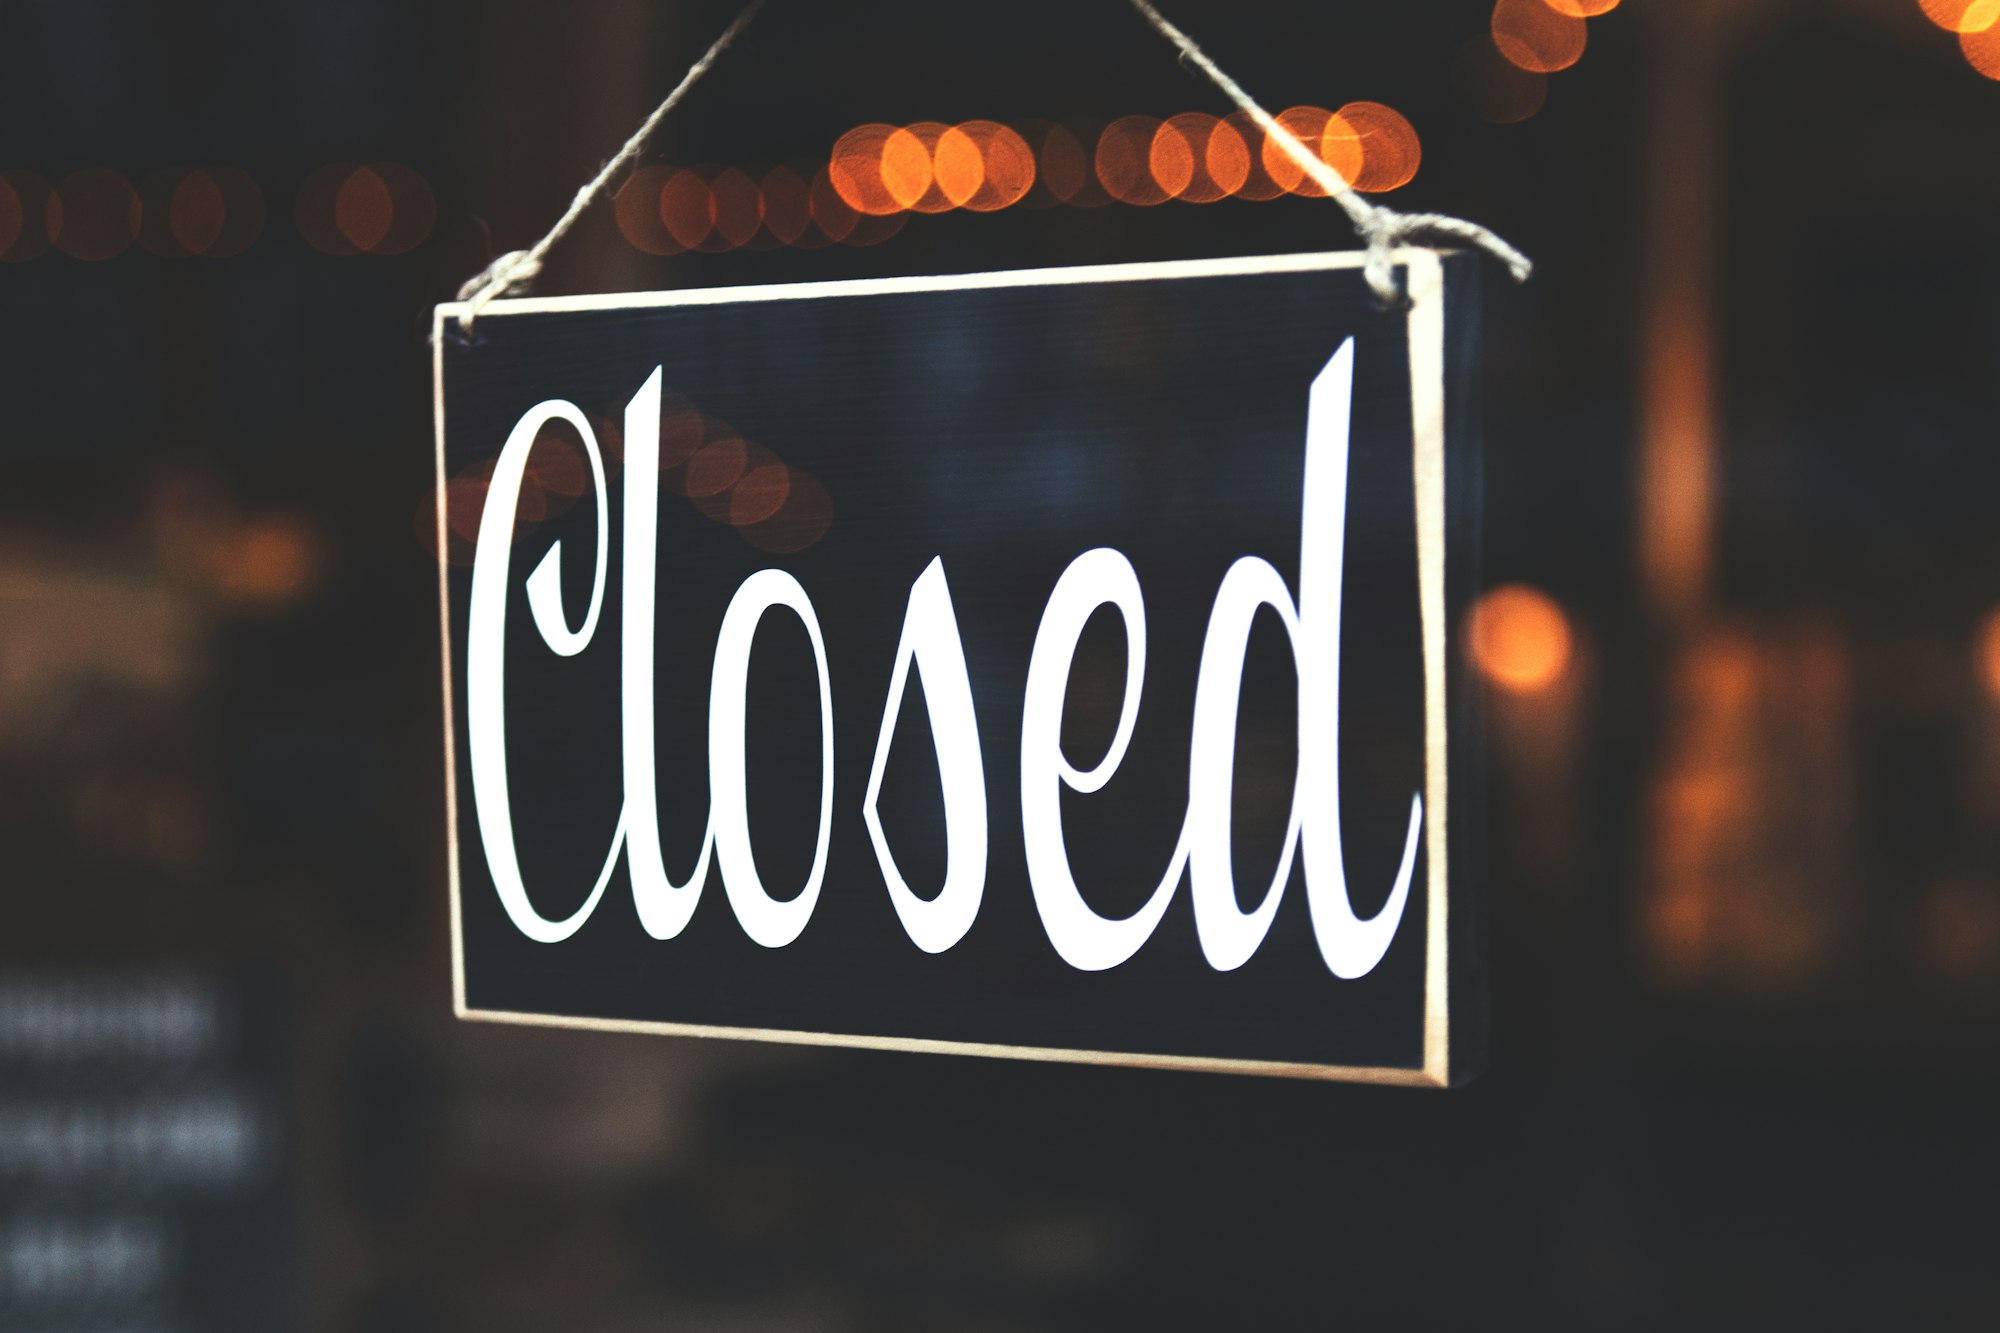 We’re Closed | Instagram: @timmossholder